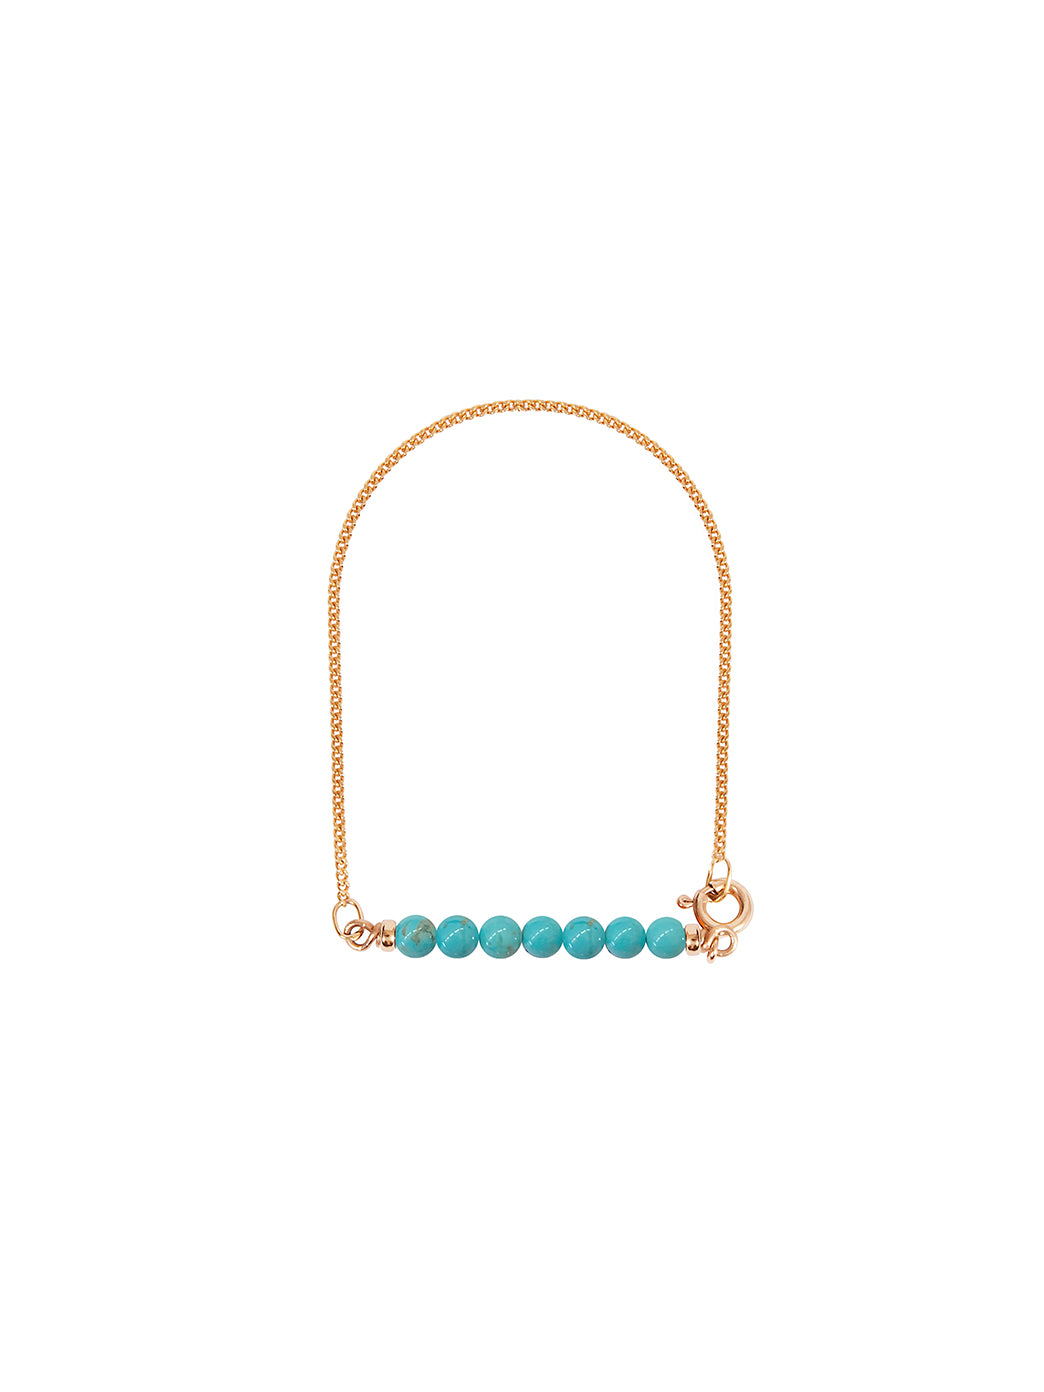 Fiorina Jewellery Gold Friendship Bracelet Turquoise